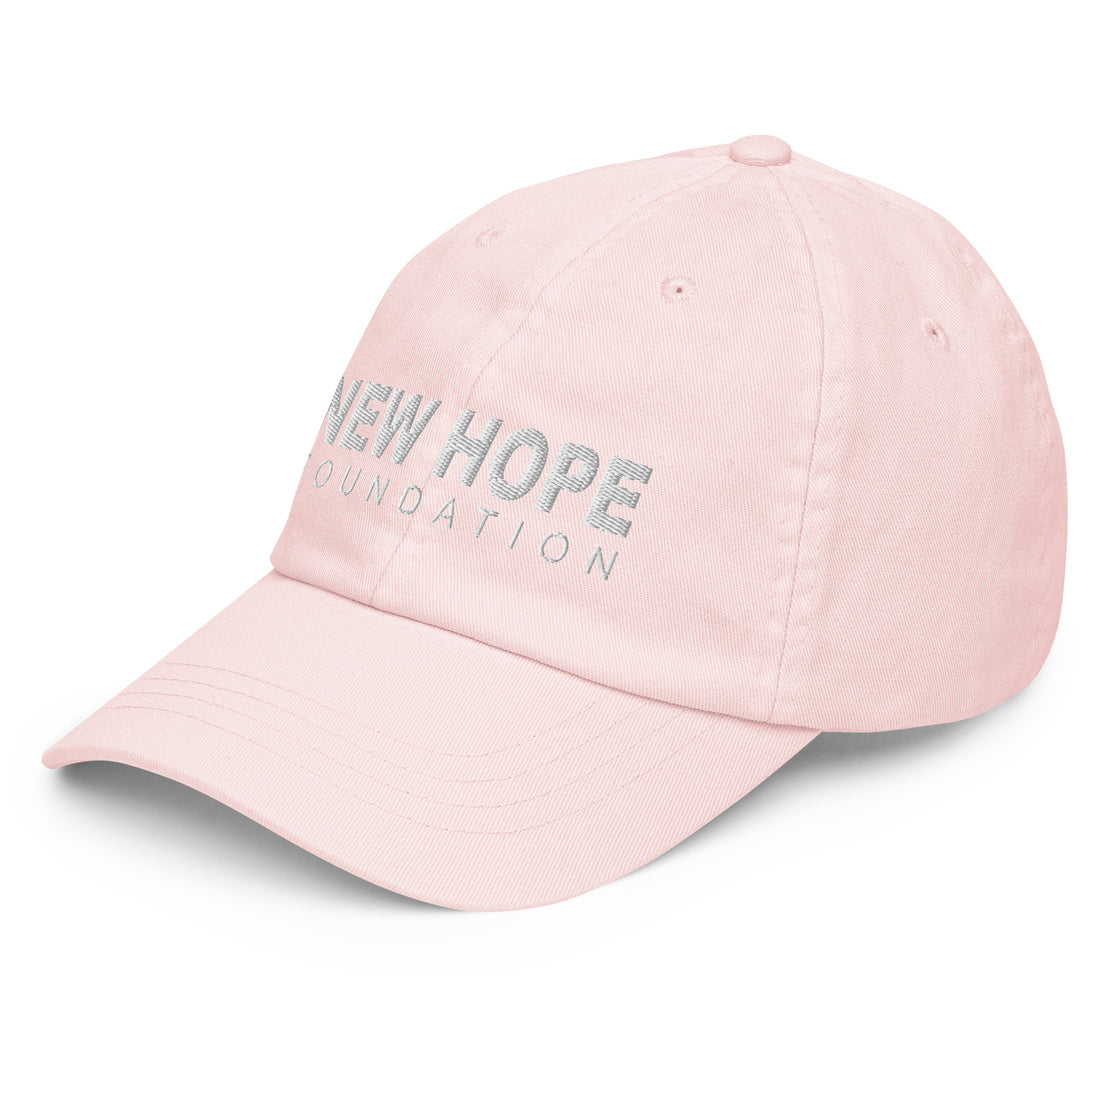 NHF Pastel Baseball Hat